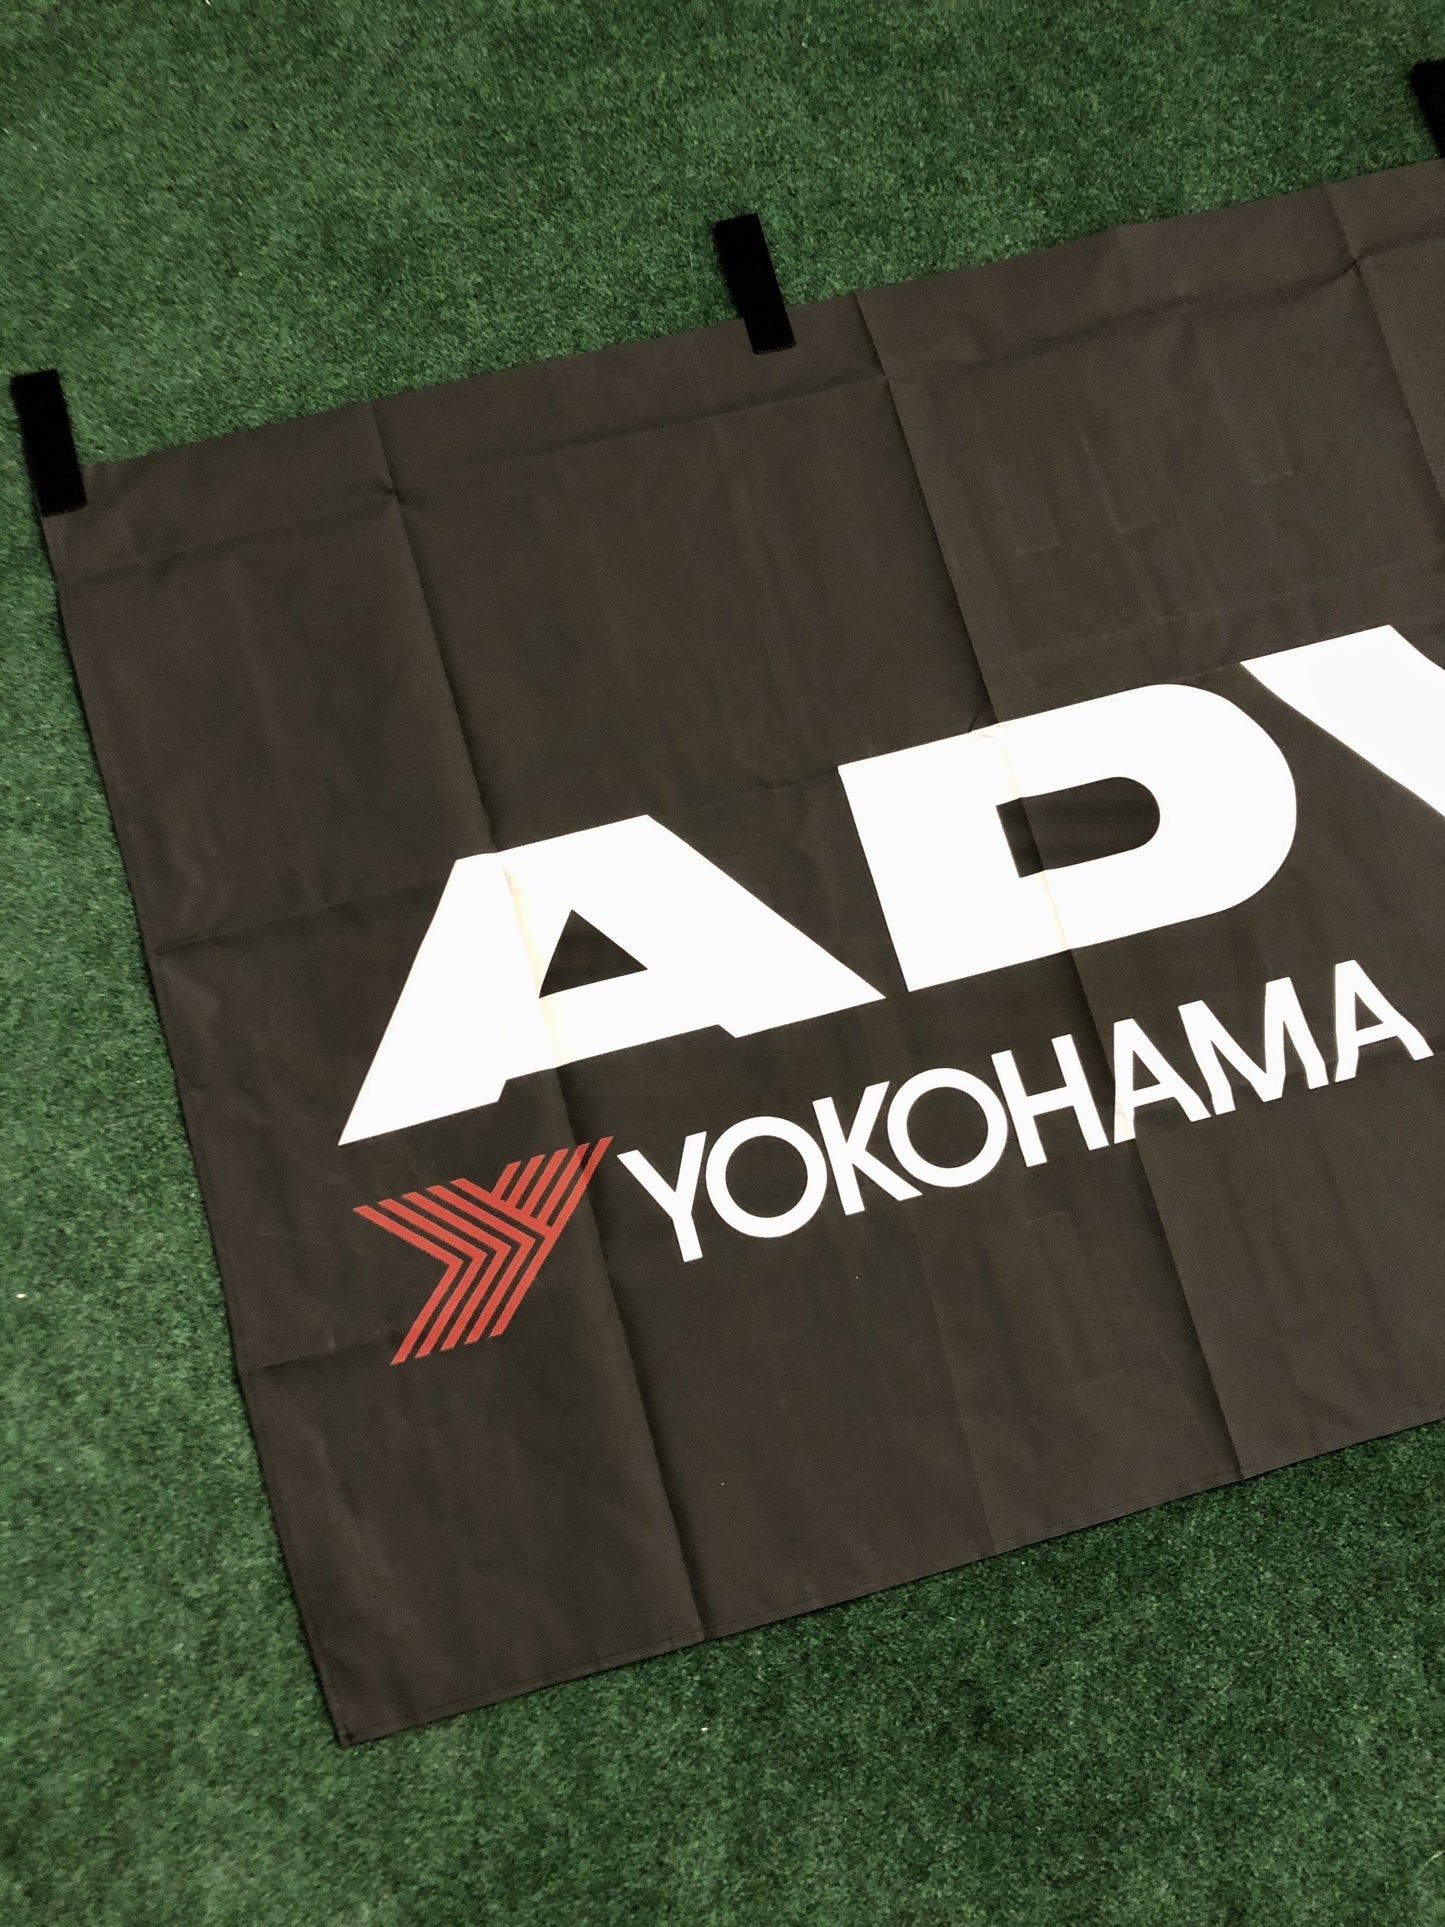 ADVAN Yokohama Tires Nobori Banner